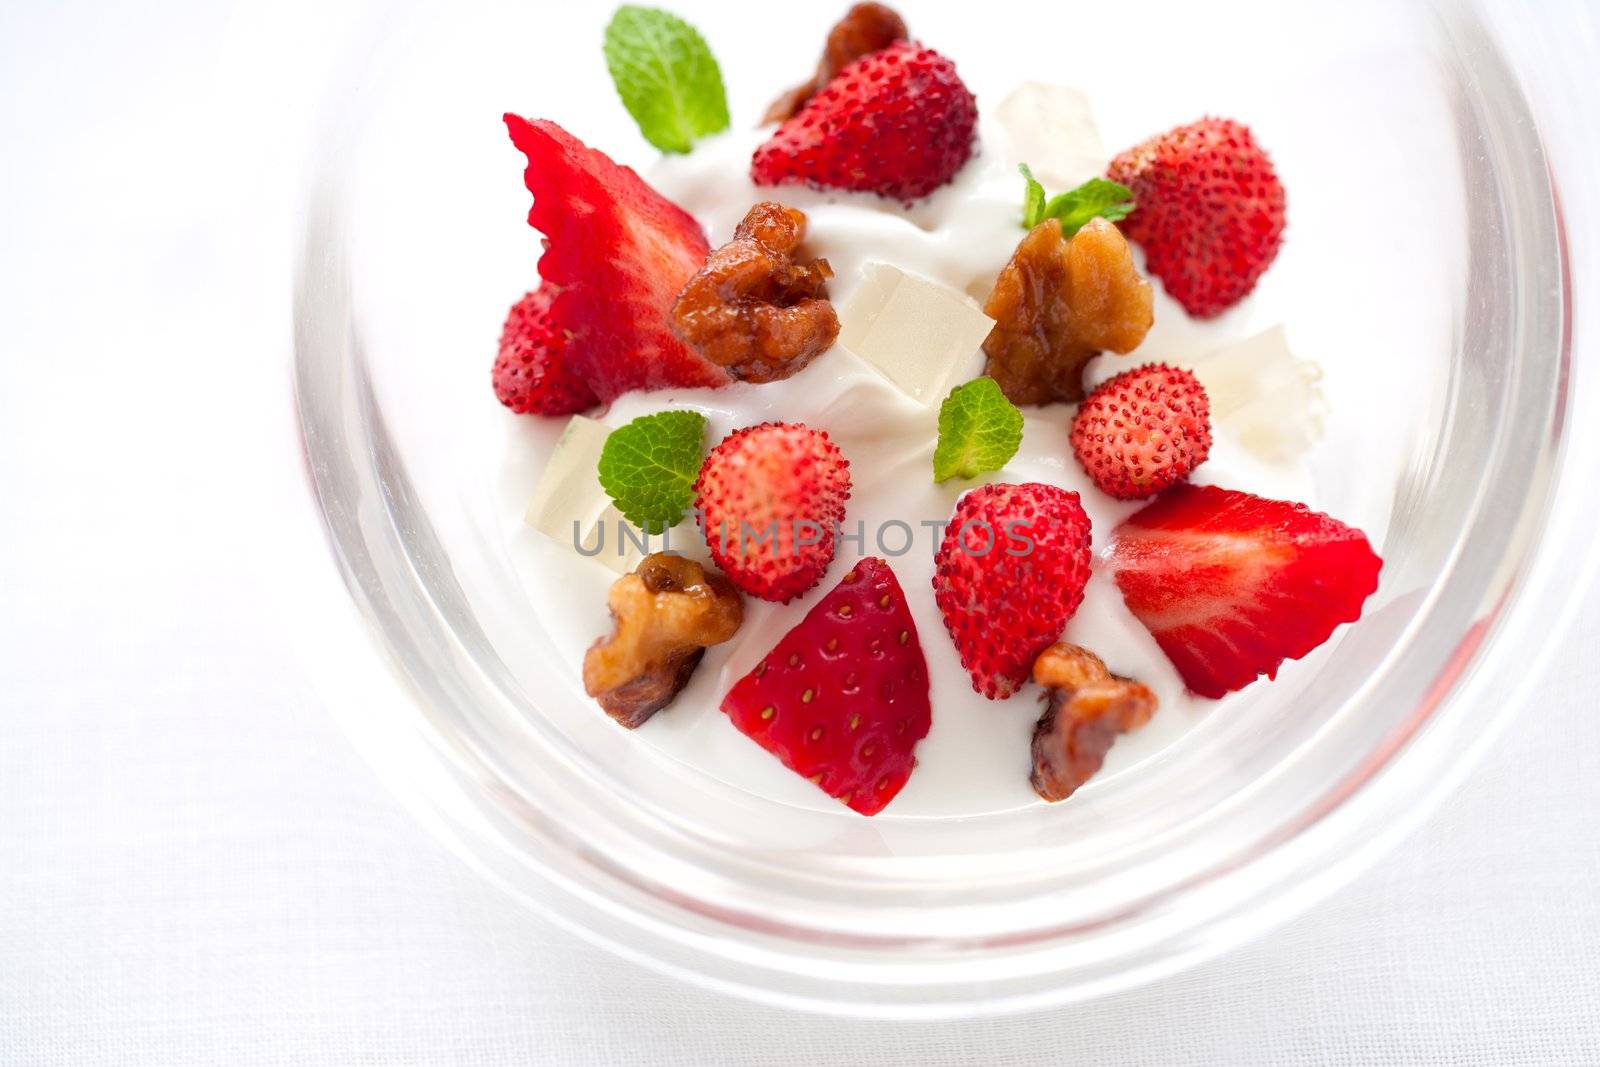 Yogurt with strawberries and nuts by karelnoppe